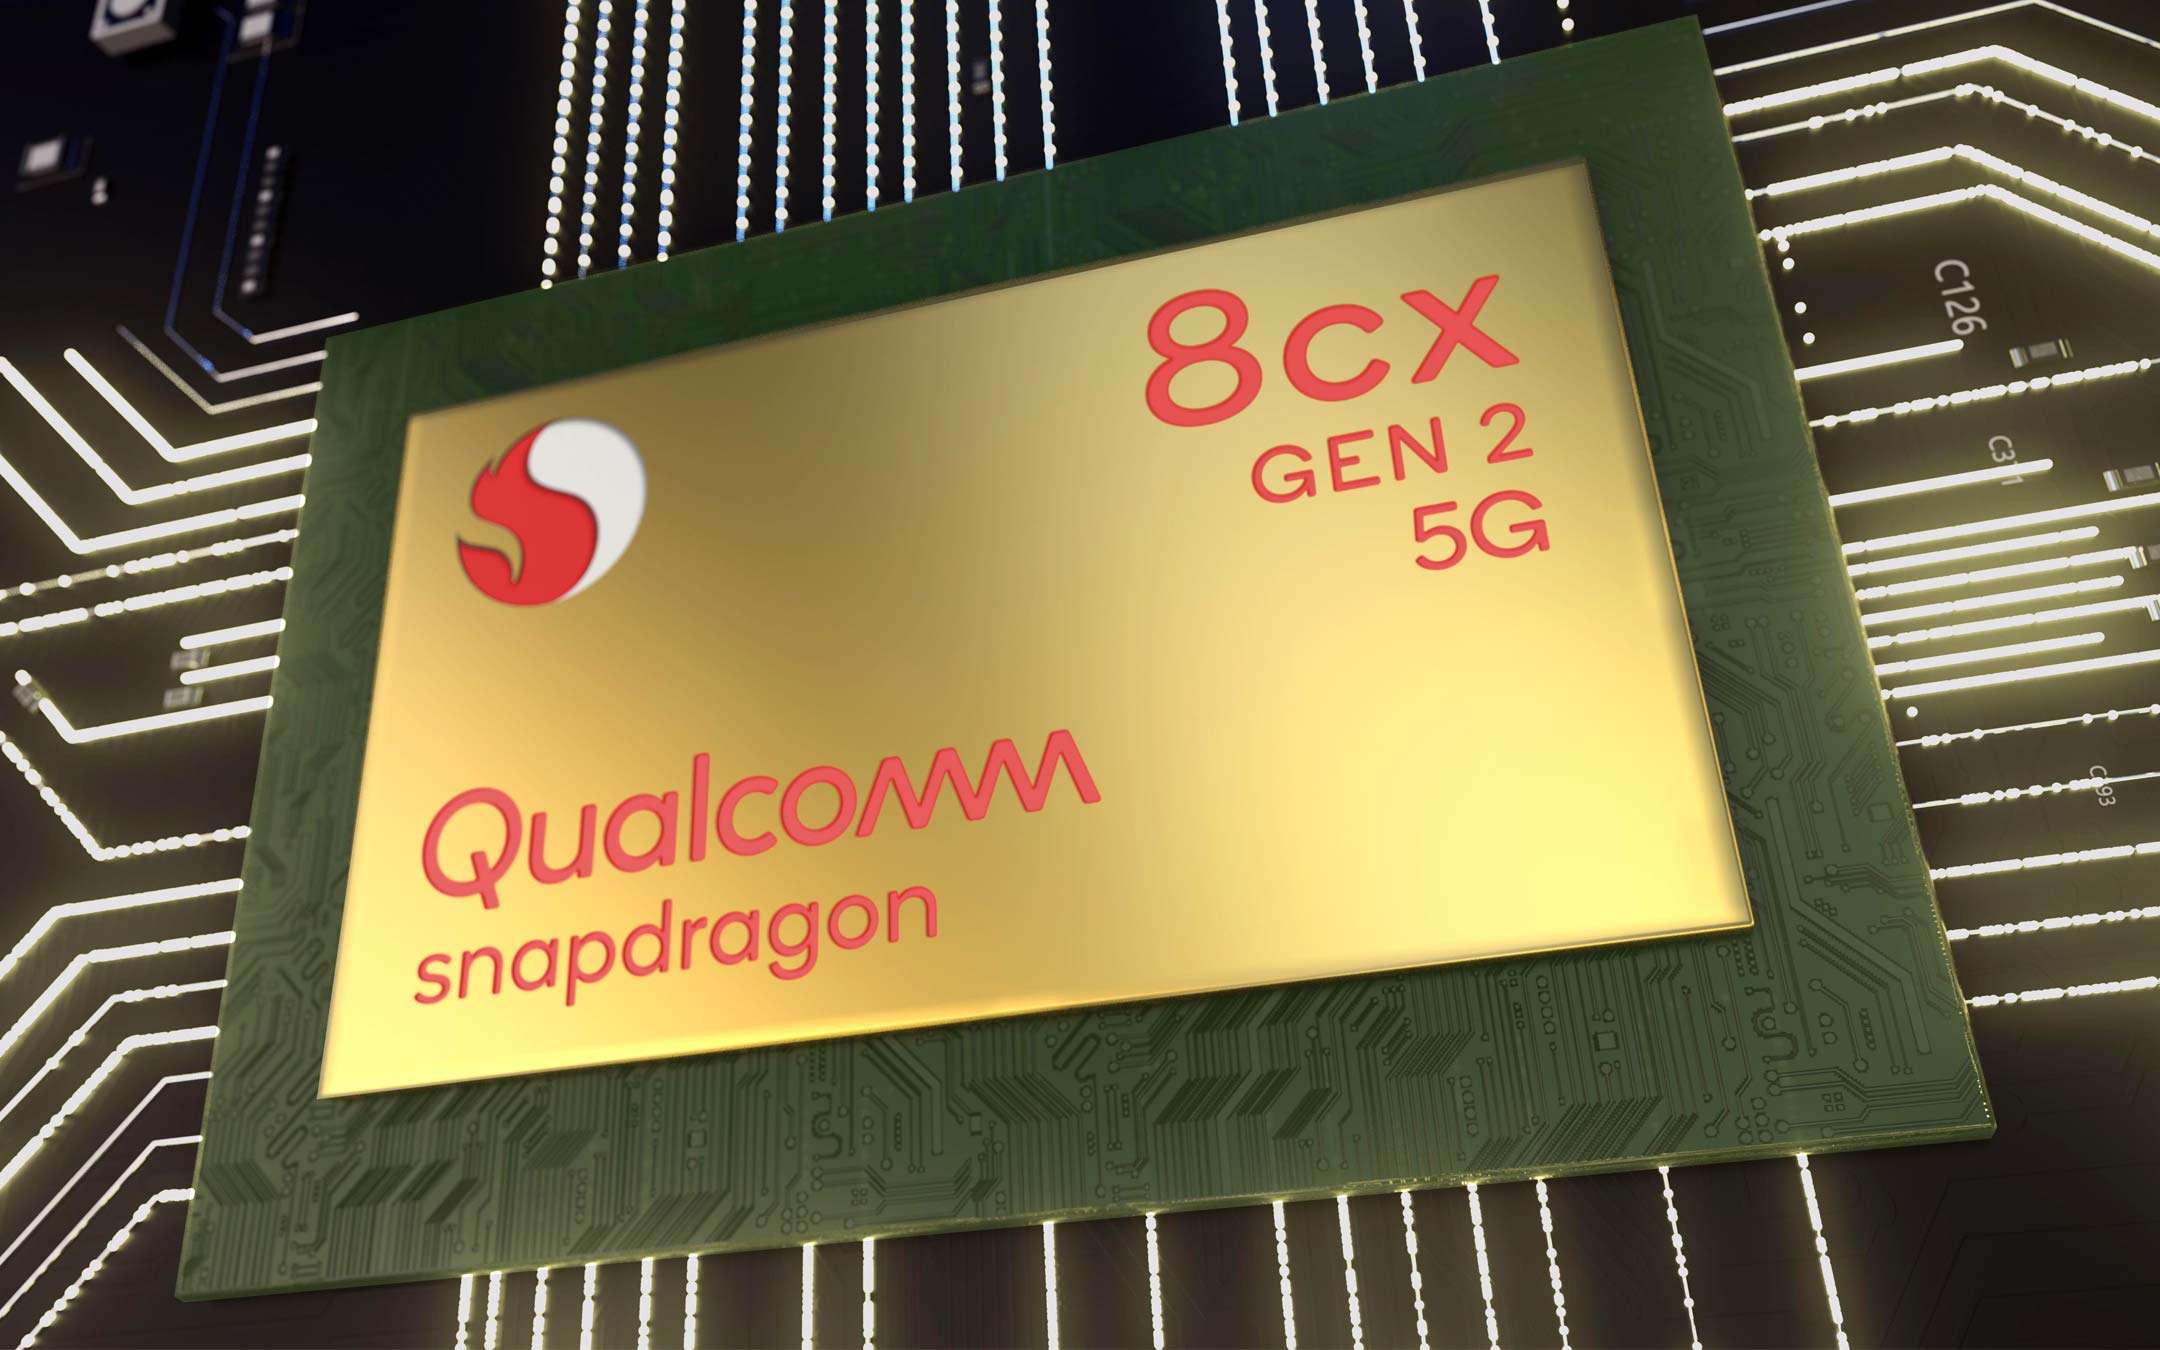 IFA 2020: here is Qualcomm Snapdragon 8cx Gen 2 5G